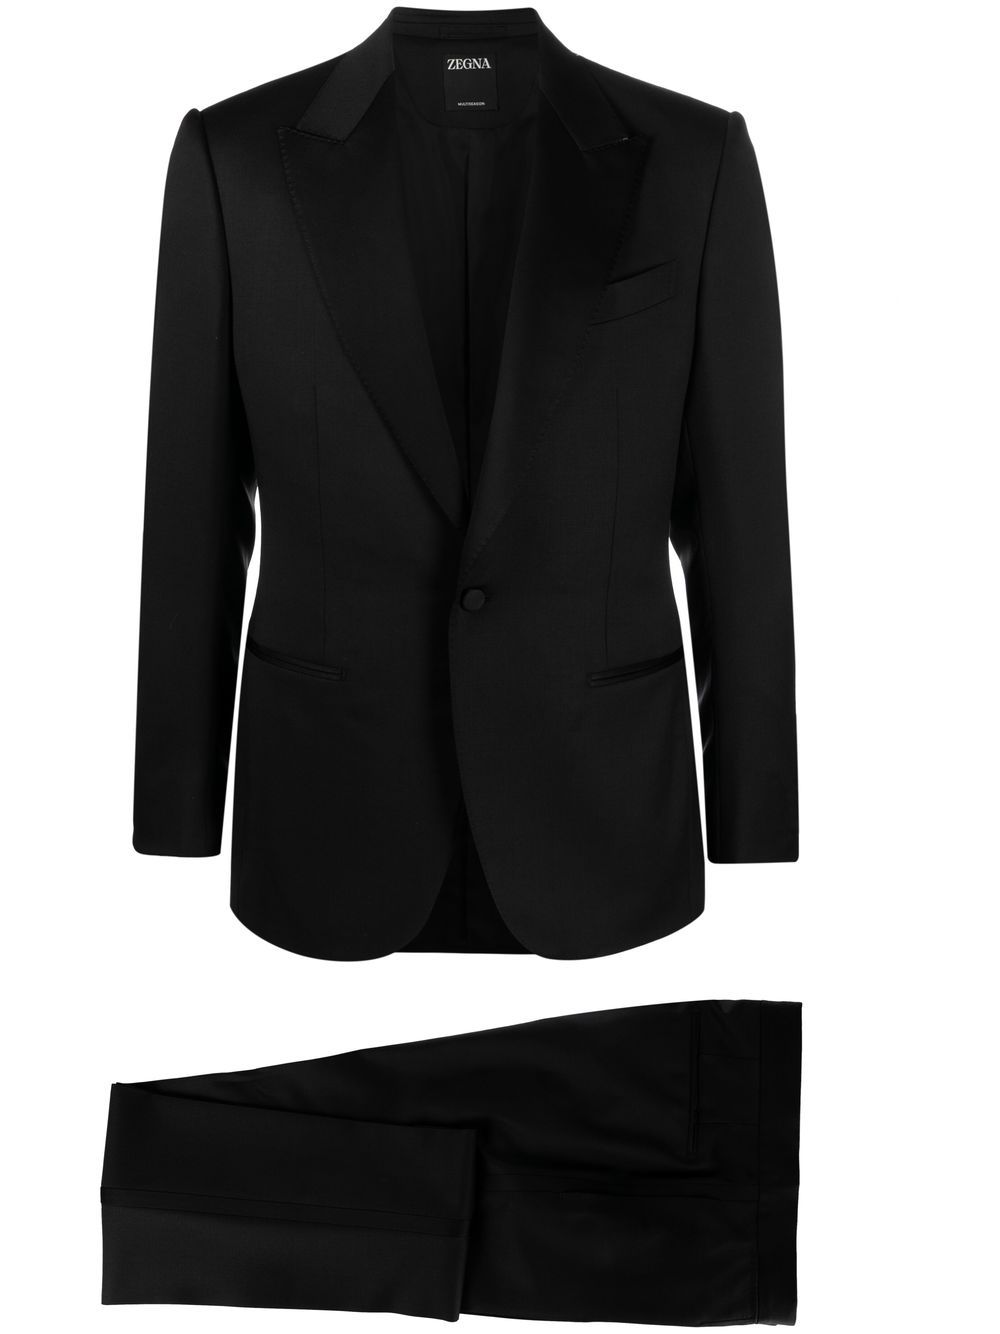 Zegna single breasted wool suit - Black von Zegna